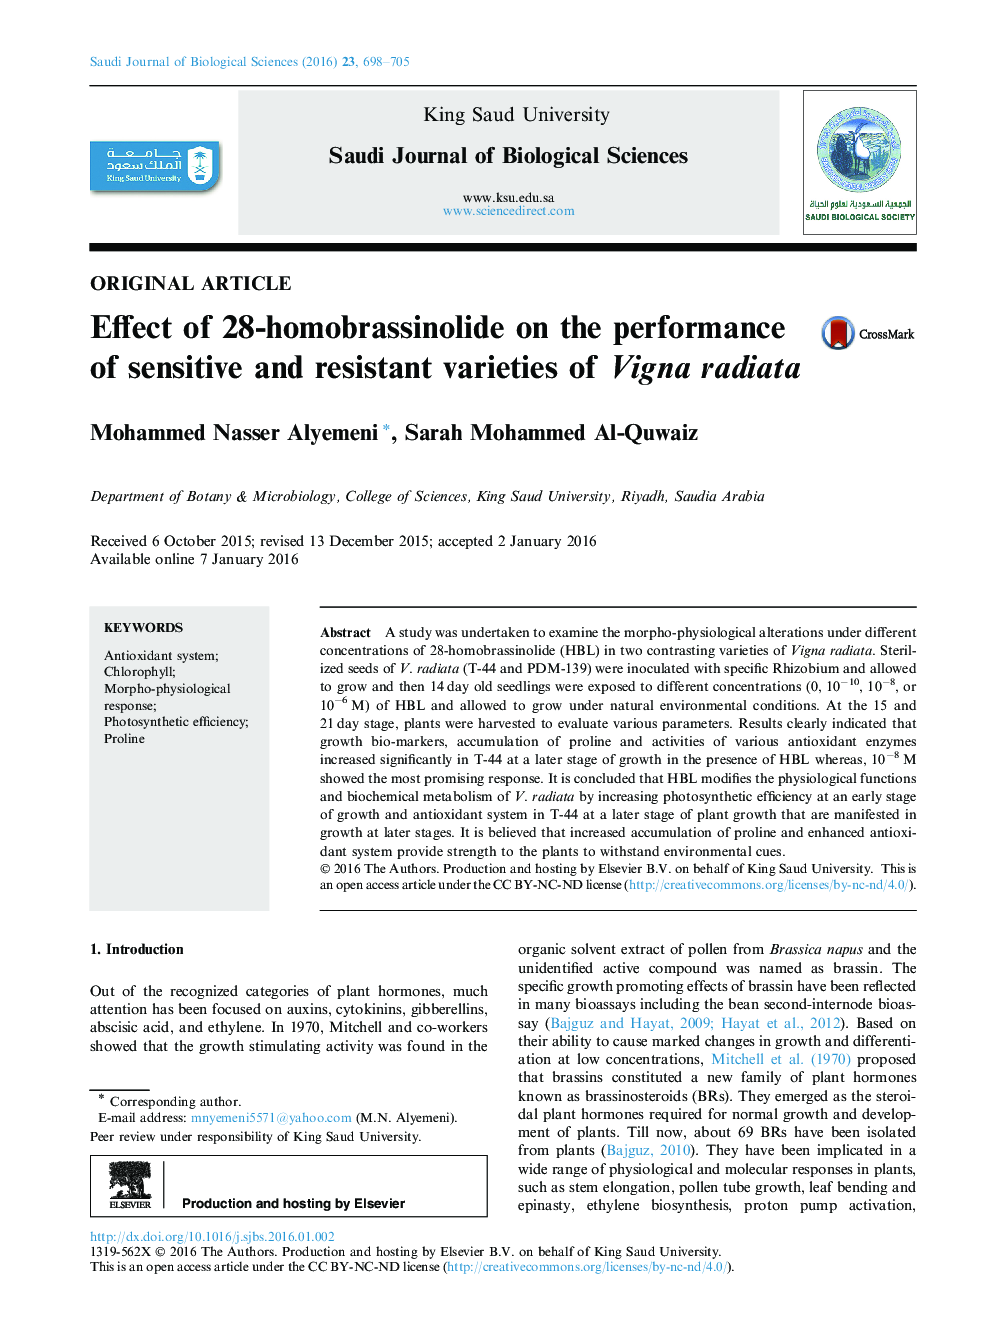 Original articleEffect of 28-homobrassinolide on the performance of sensitive and resistant varieties of Vigna radiata